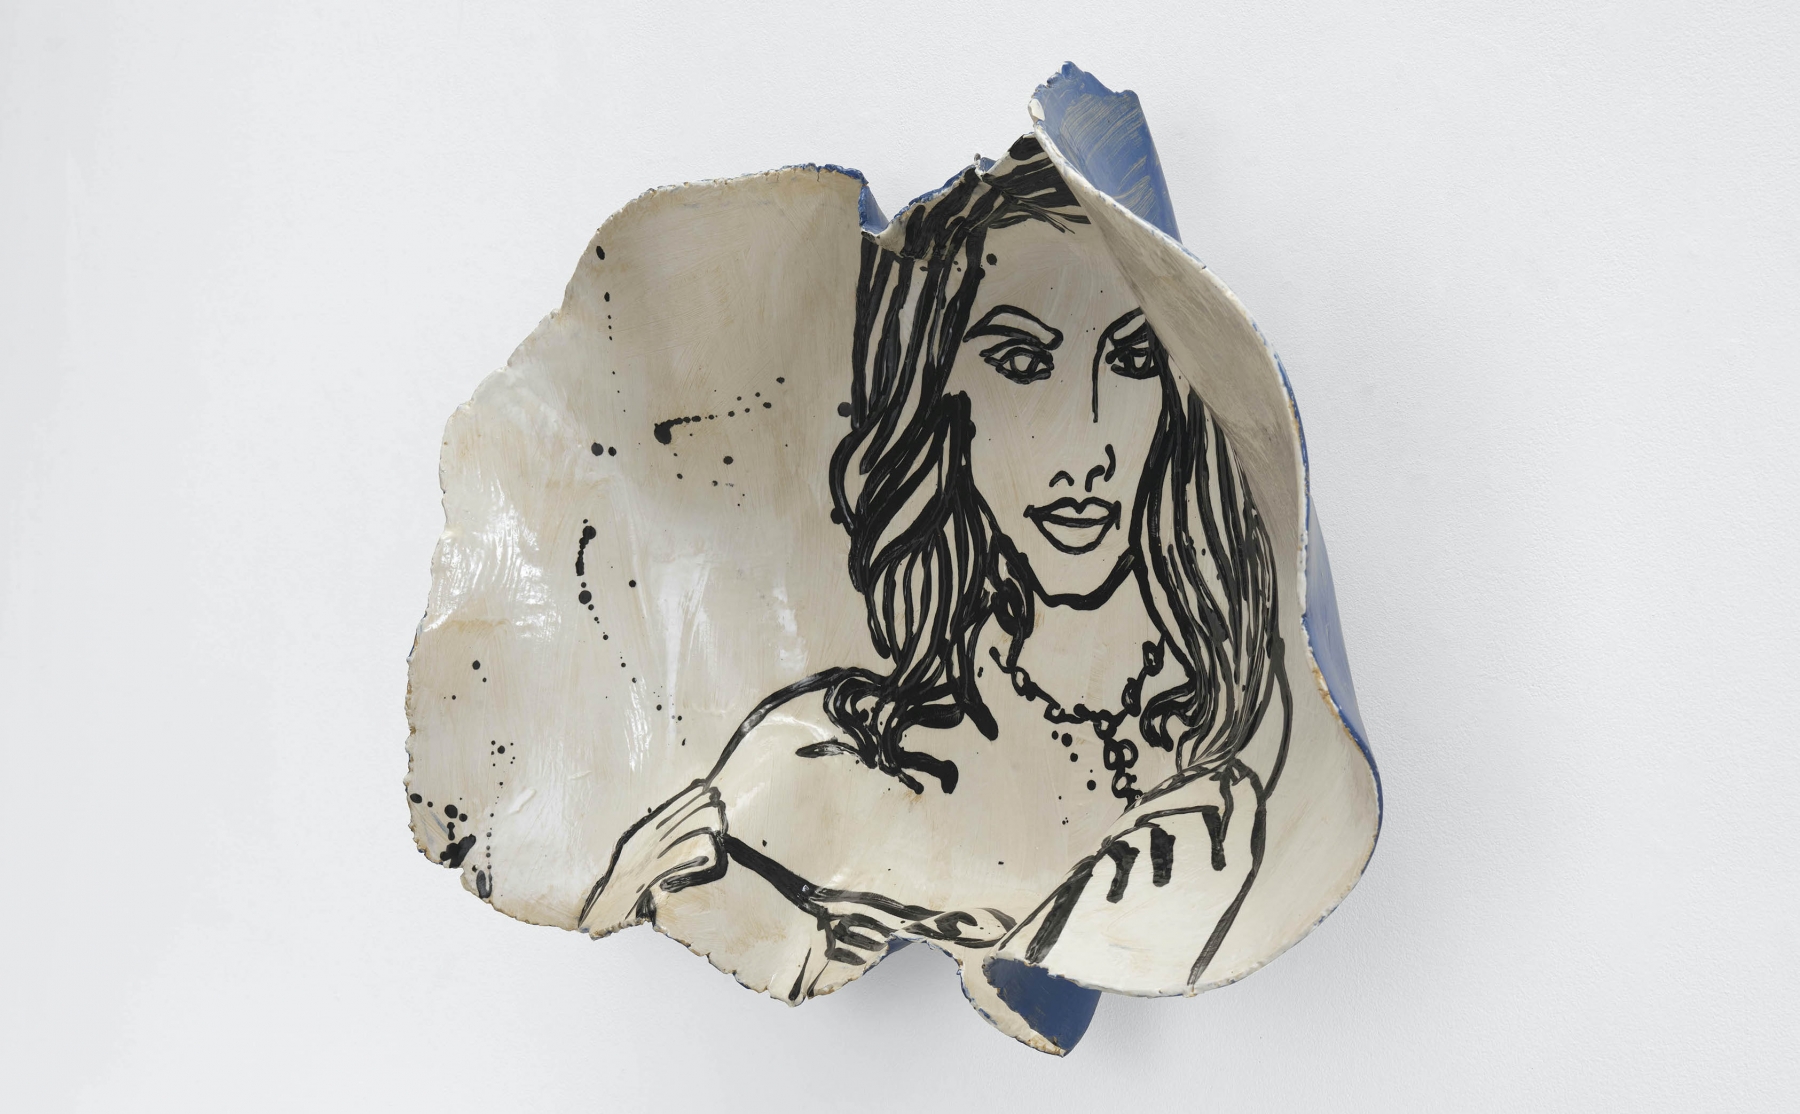 Ghada Amer, The Gypsy Girl, 2017, Glazed ceramic, 25 x 35 inches 63.5 x 88.9 cm, courtesy of the artist and Marianne Boesky Gallery